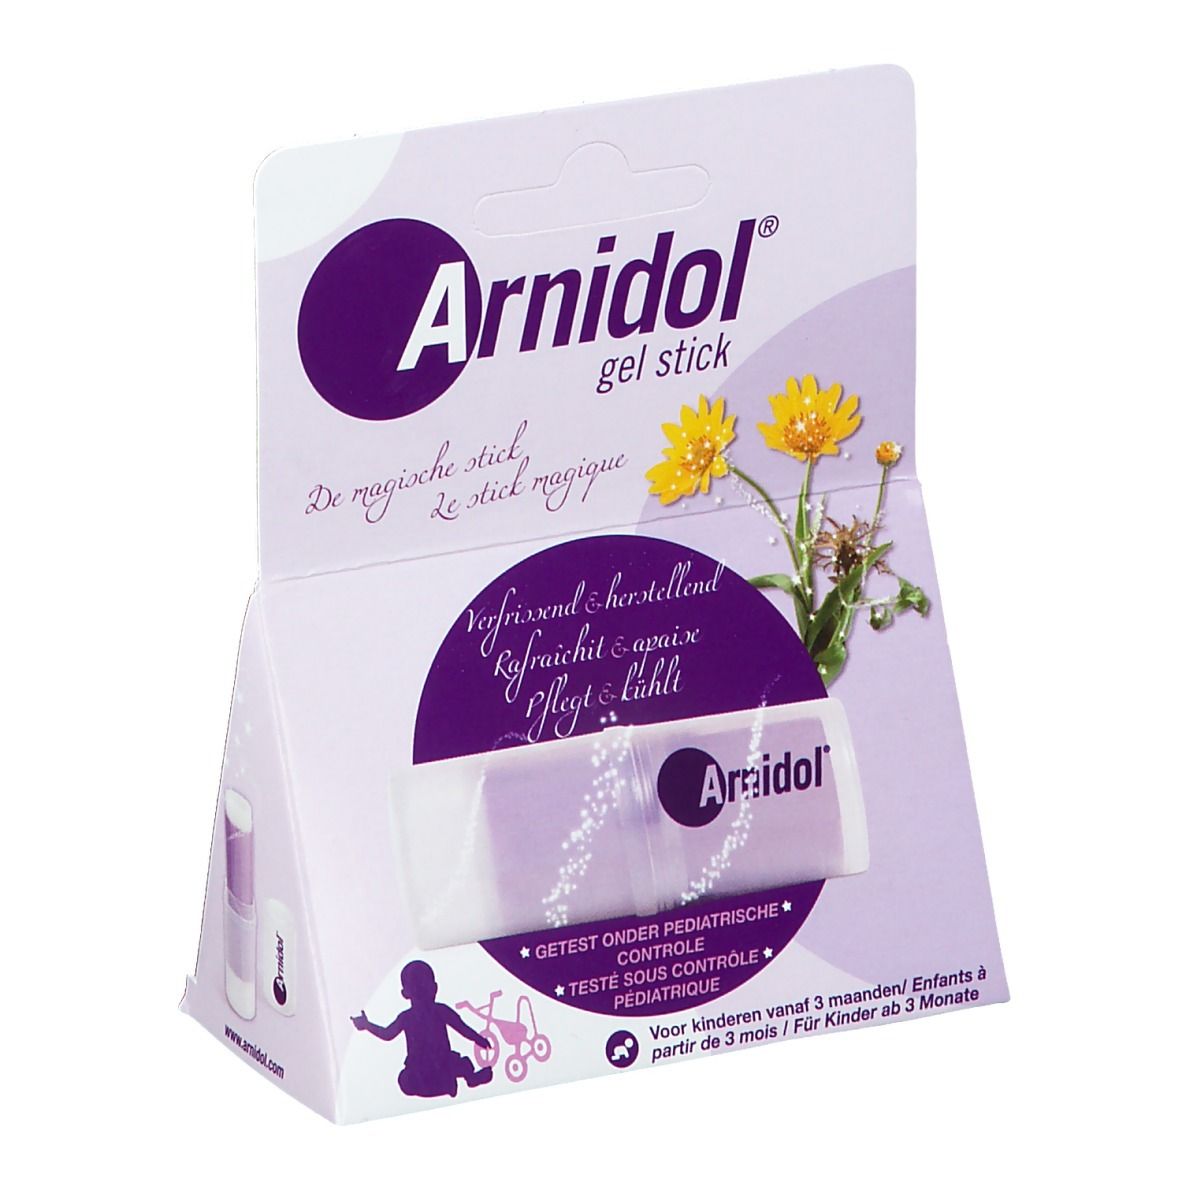 Arnidol® gel stick 15ml